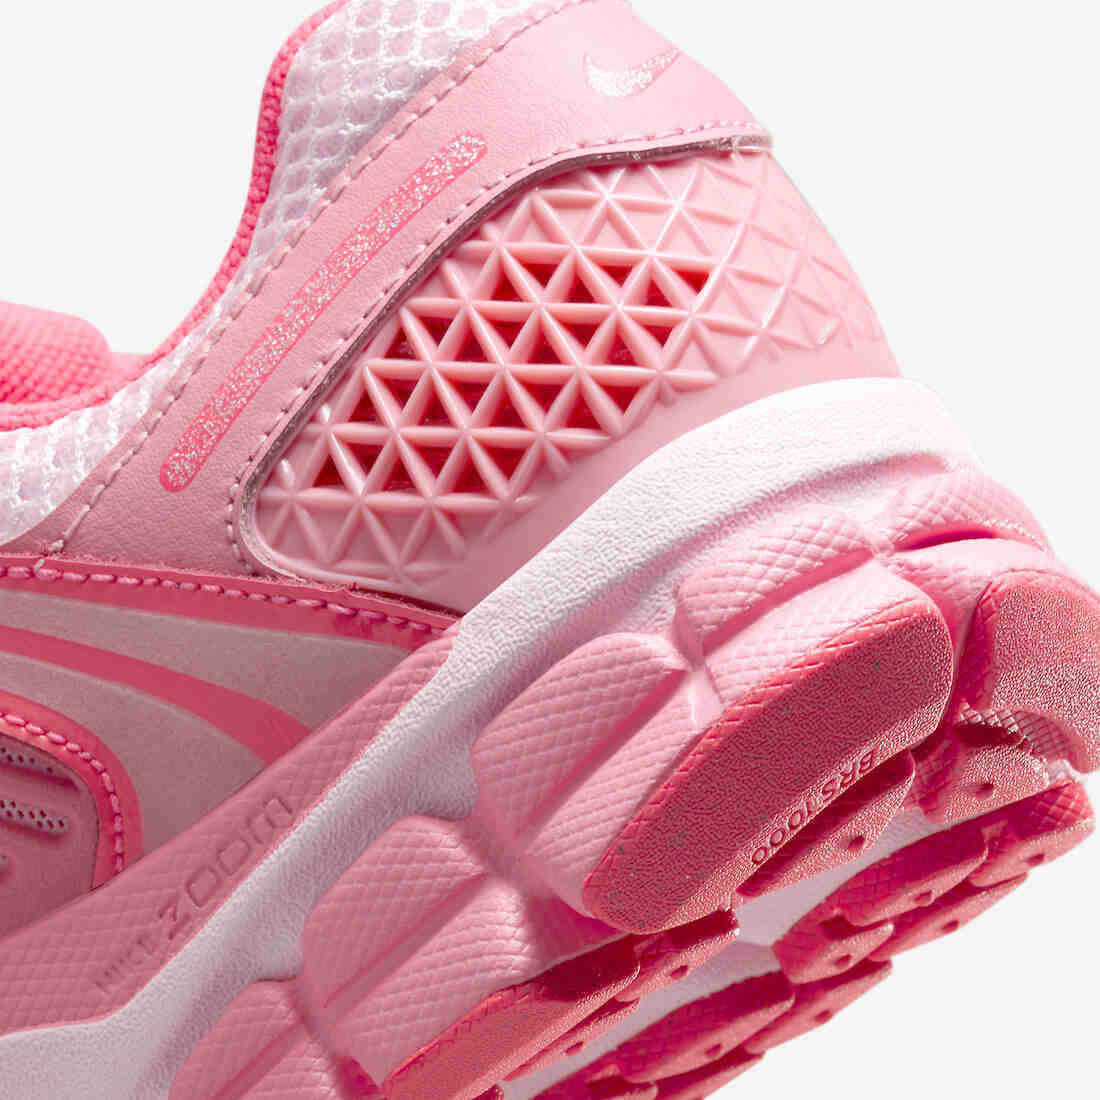 Nike Zoom Vomero 5 Triple Pink Release Date